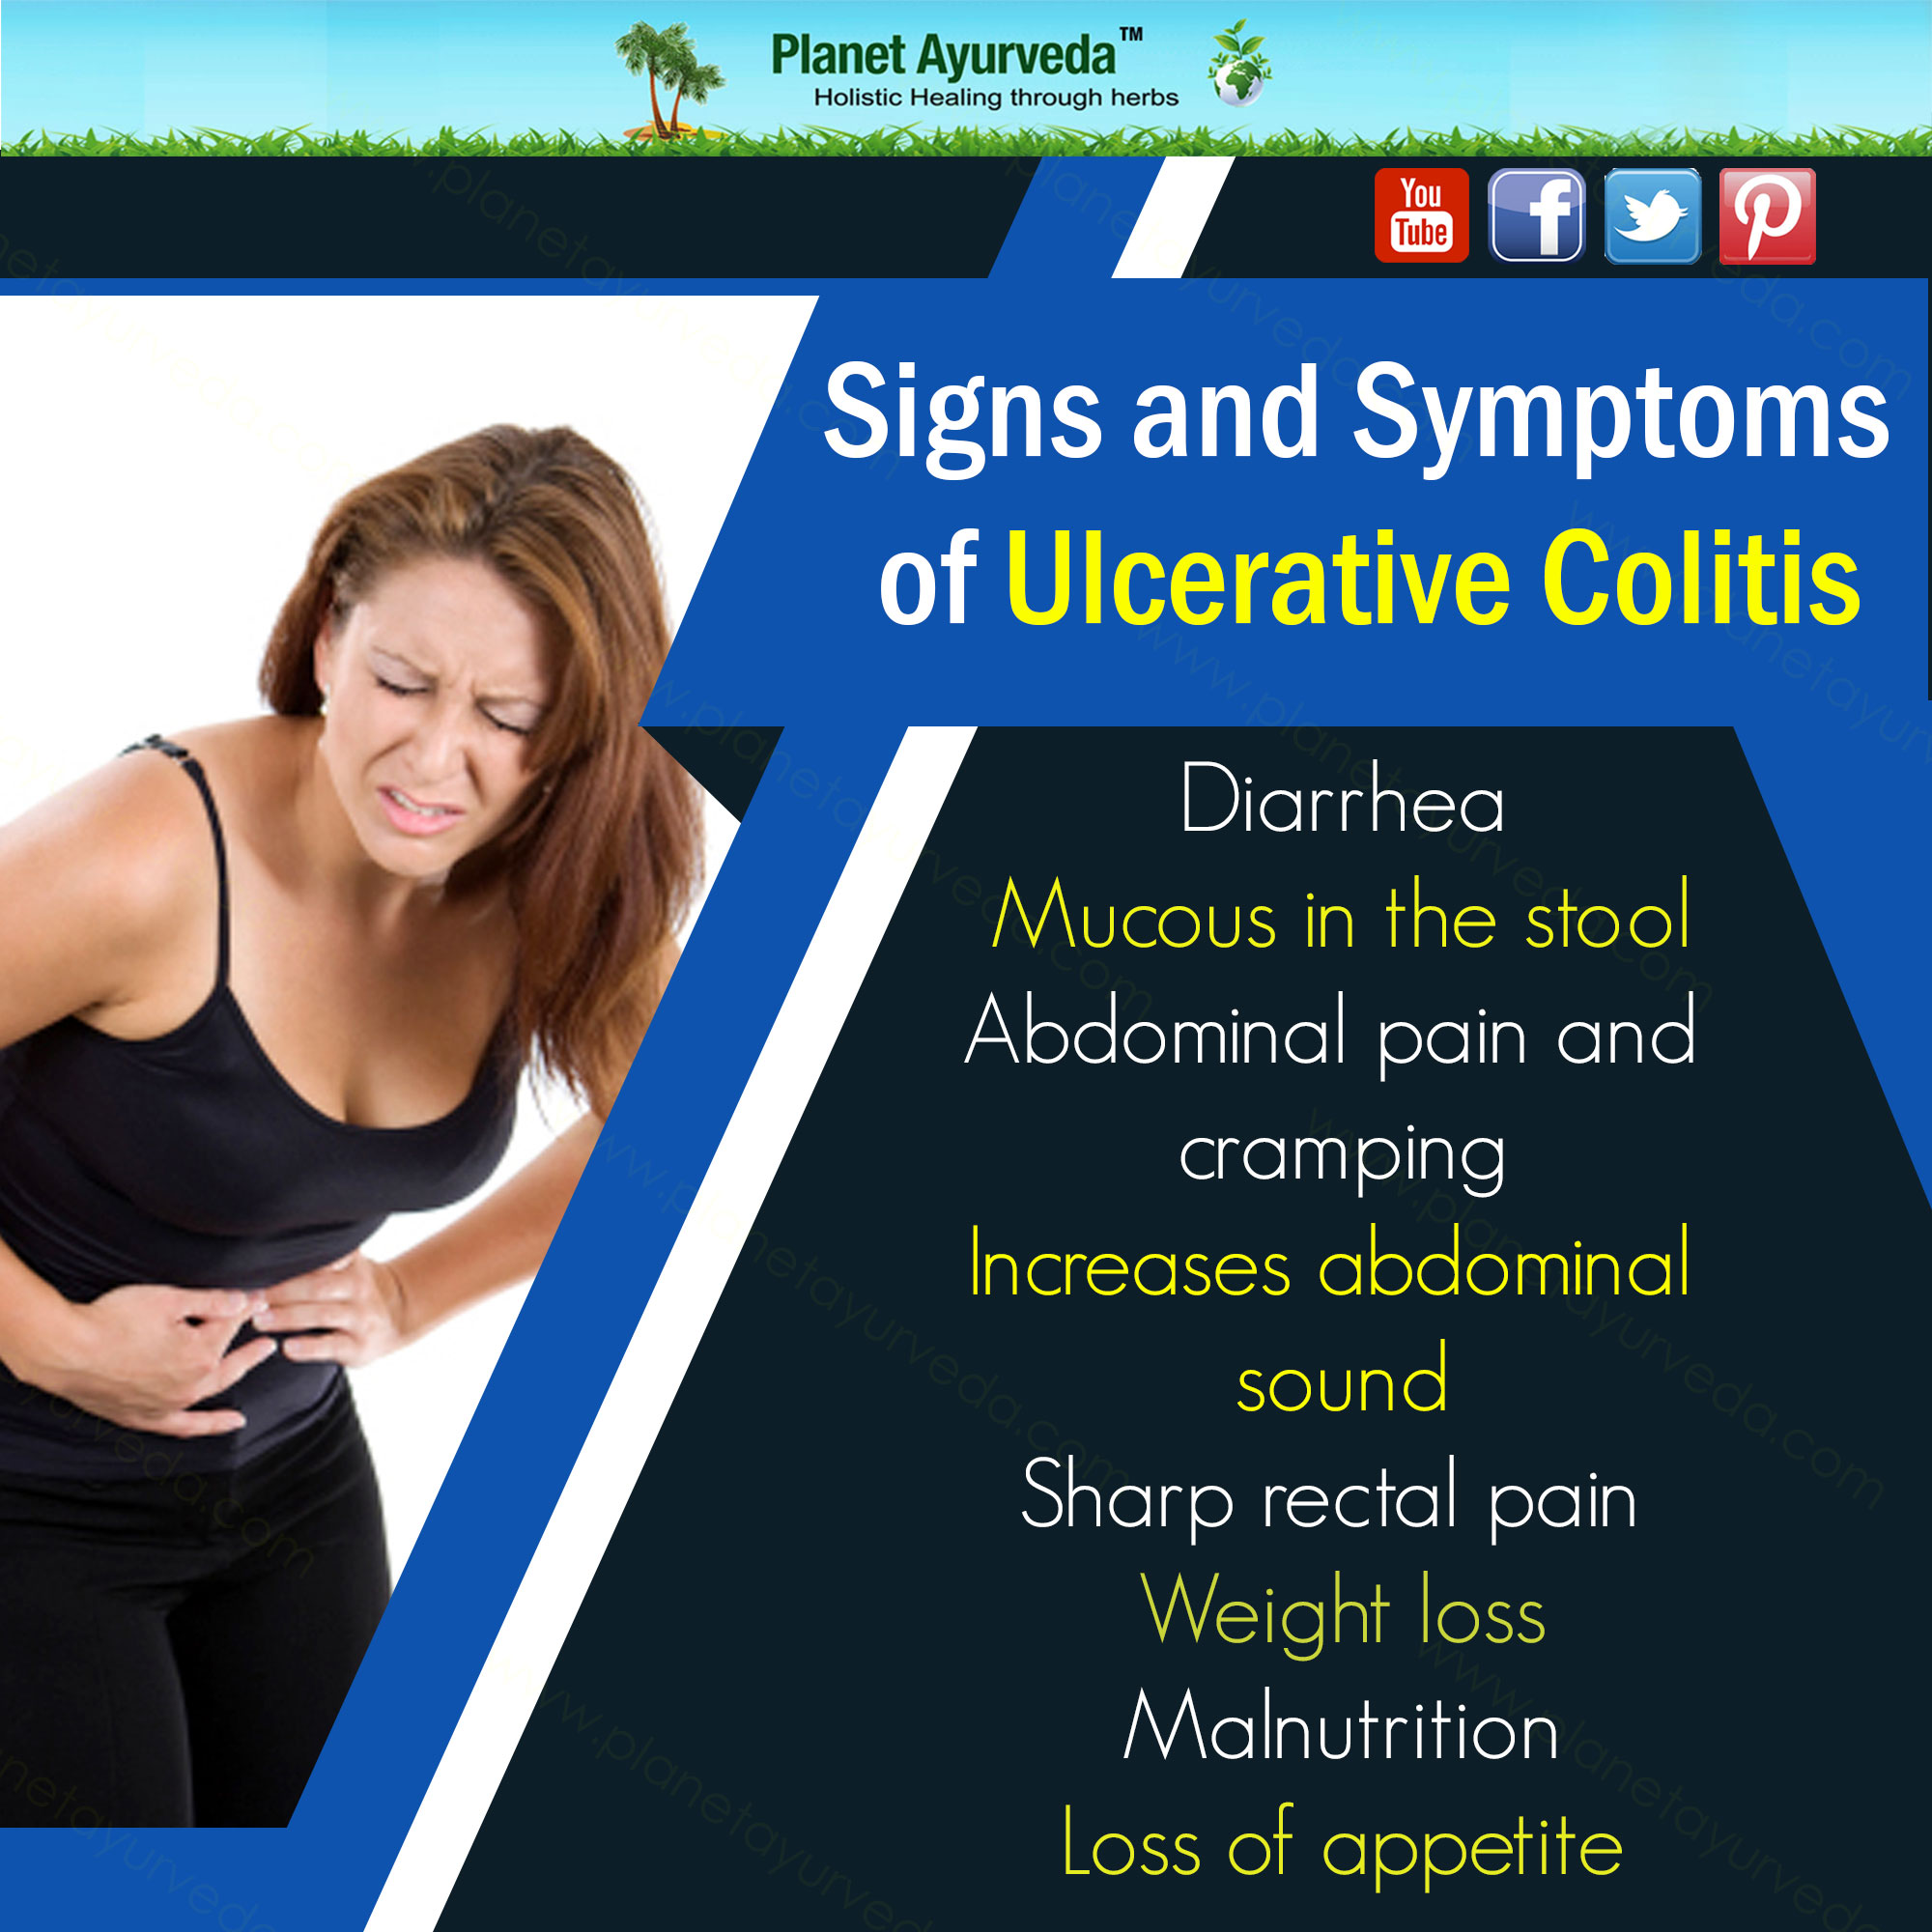 Ulcerative colitis treatment in Ayurveda